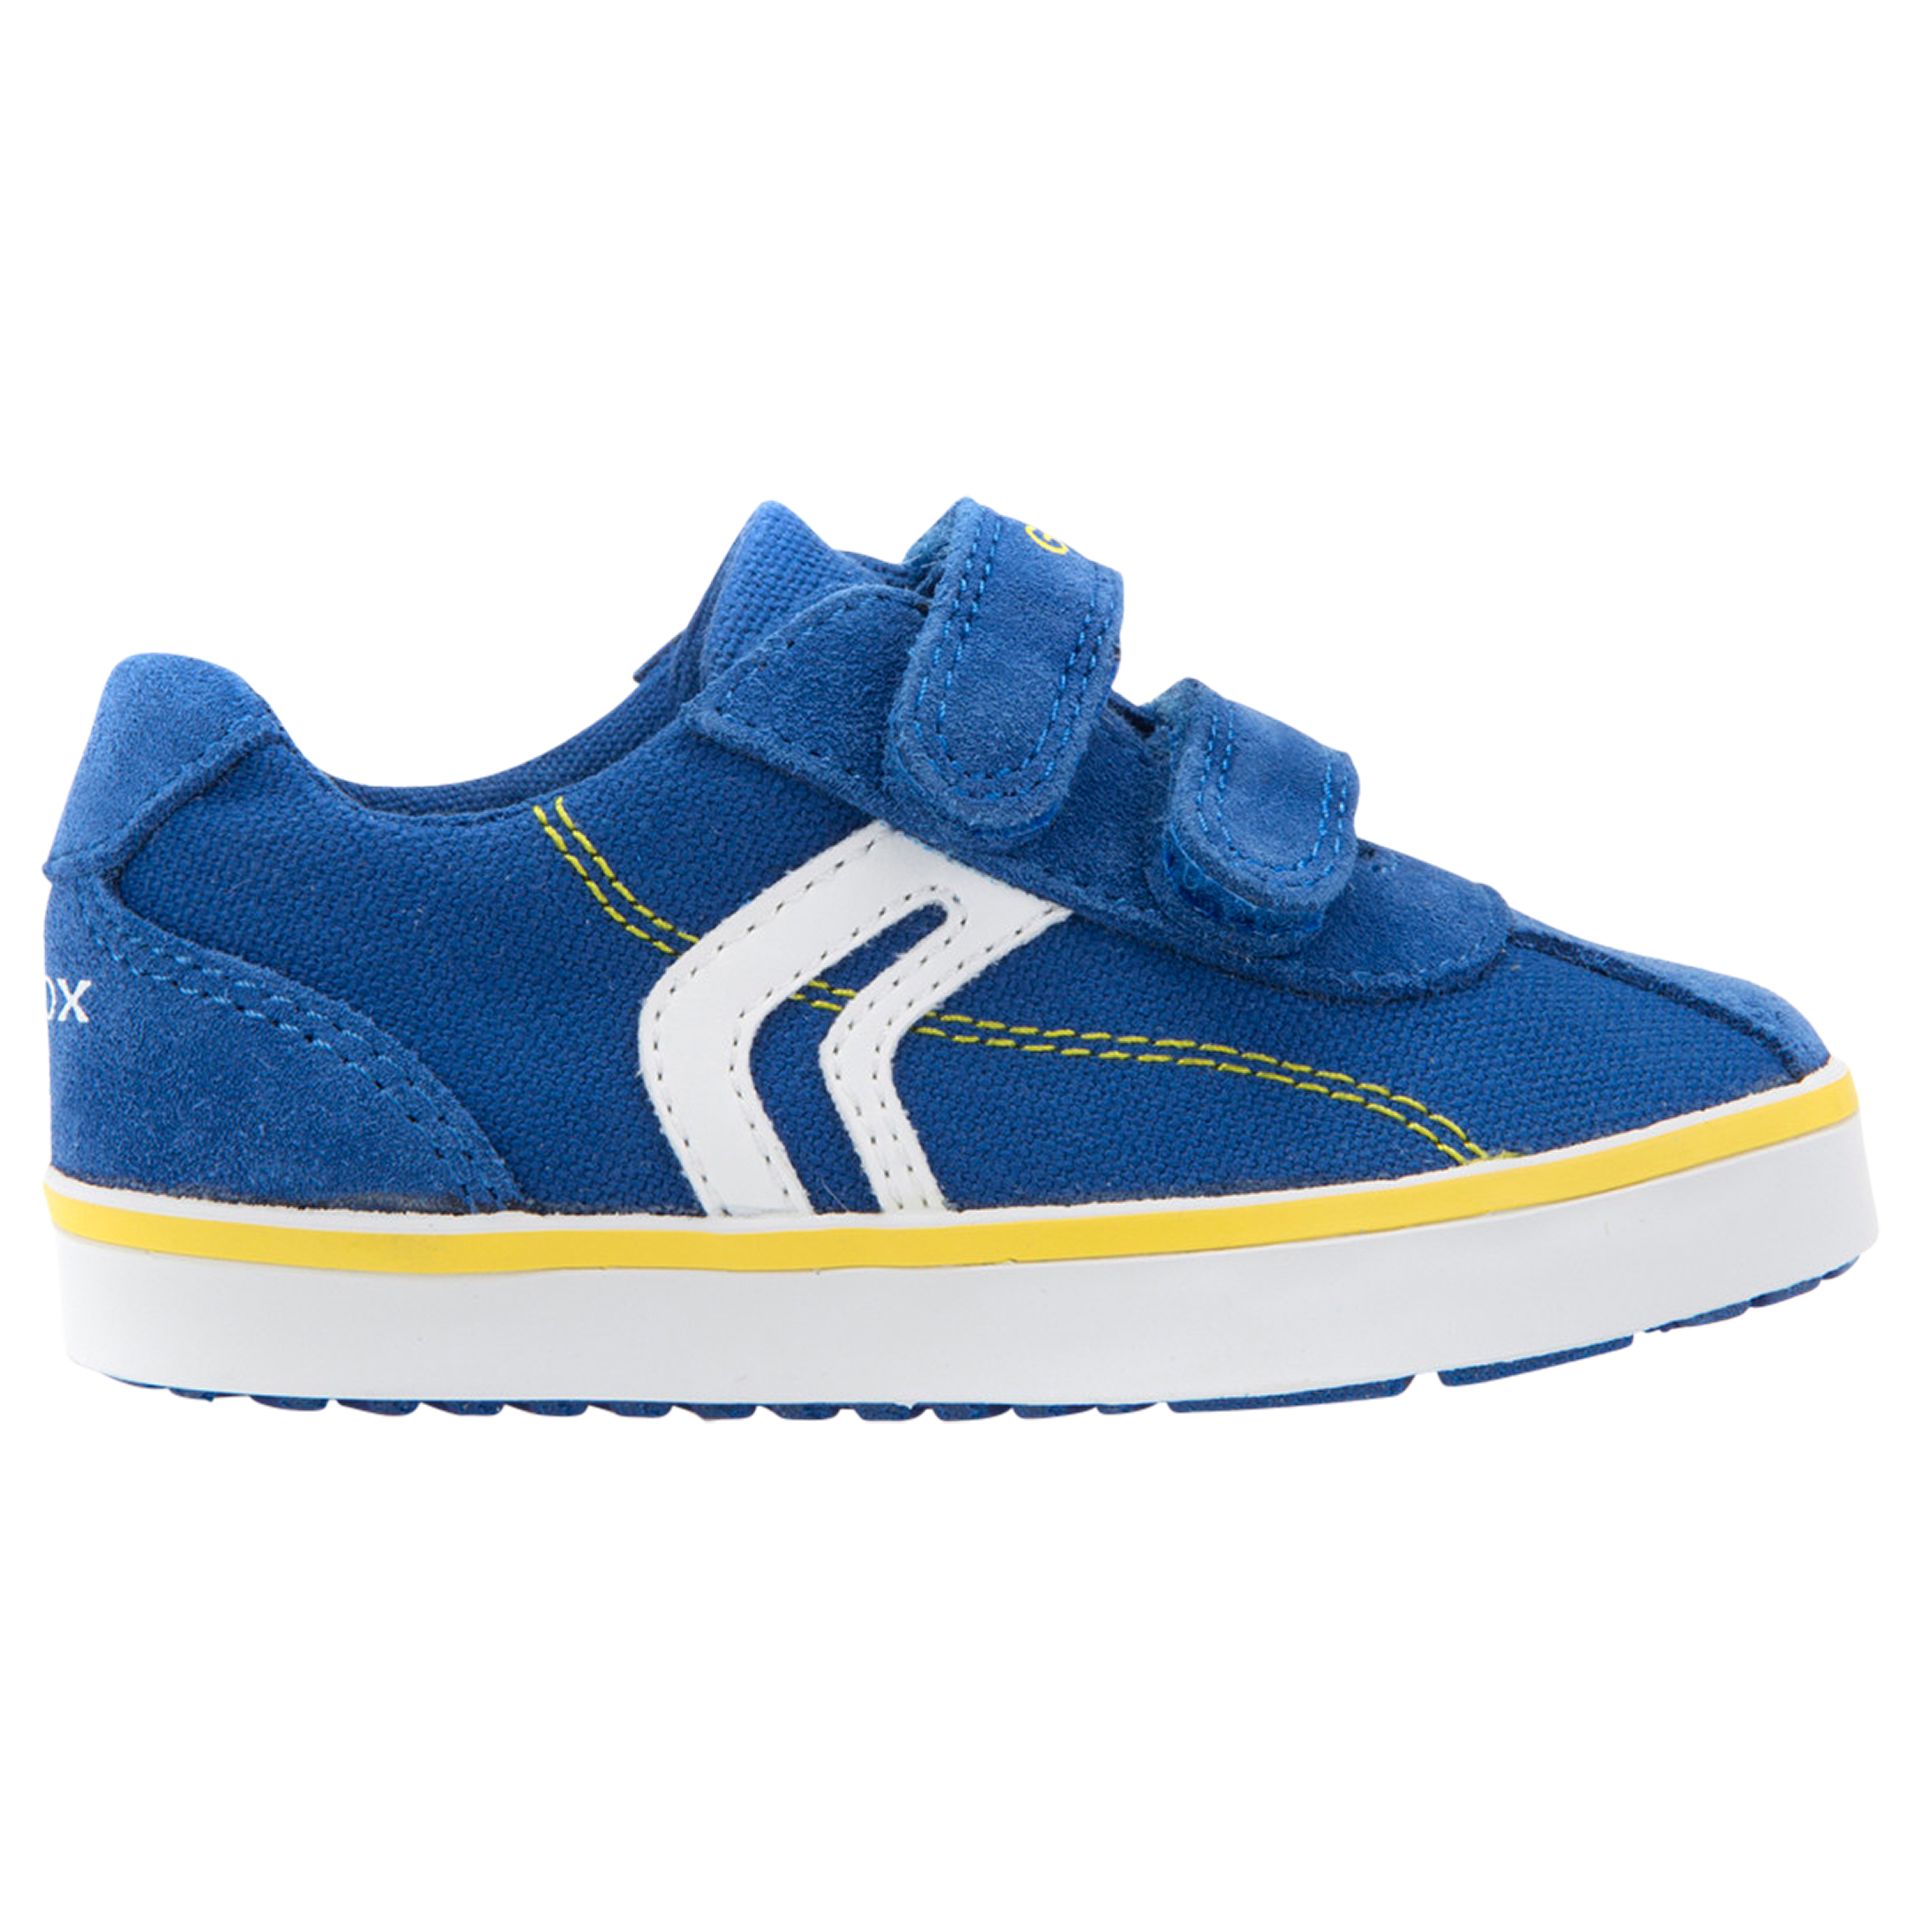 Geox Children's B Kilwi Shoes, Royal Blue